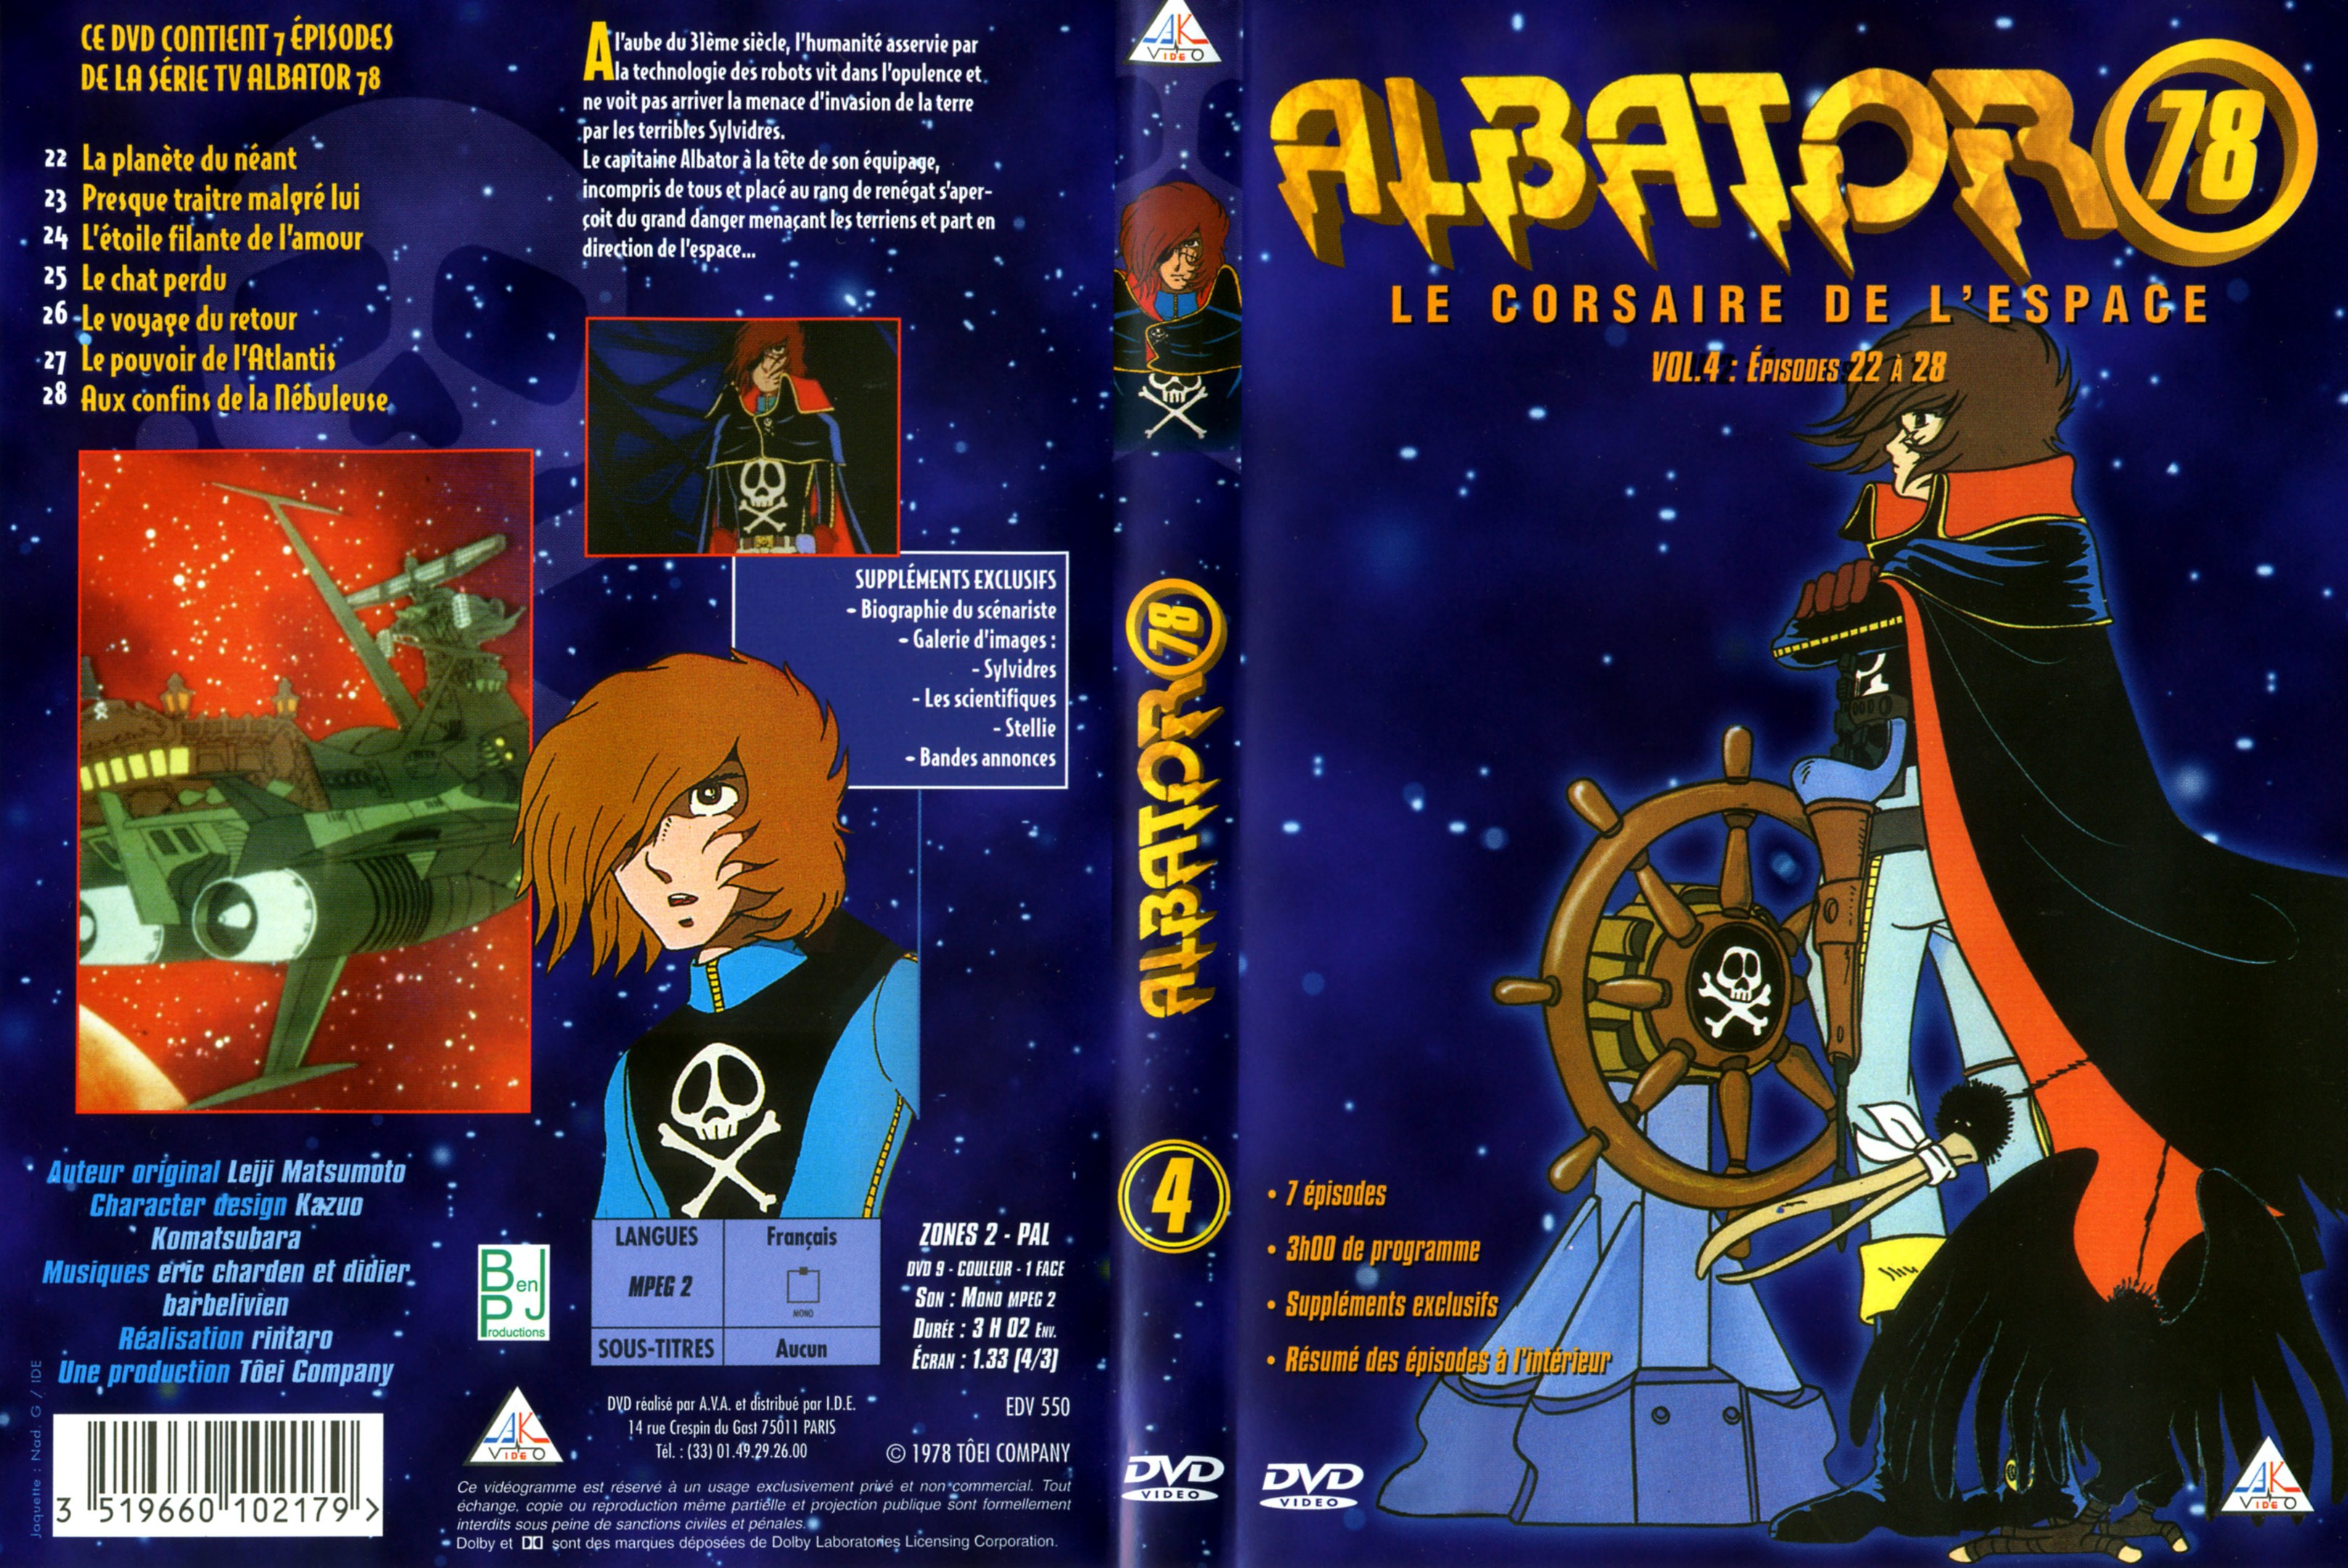 Jaquette DVD Albator 78 vol 4 (AK VIDEO)